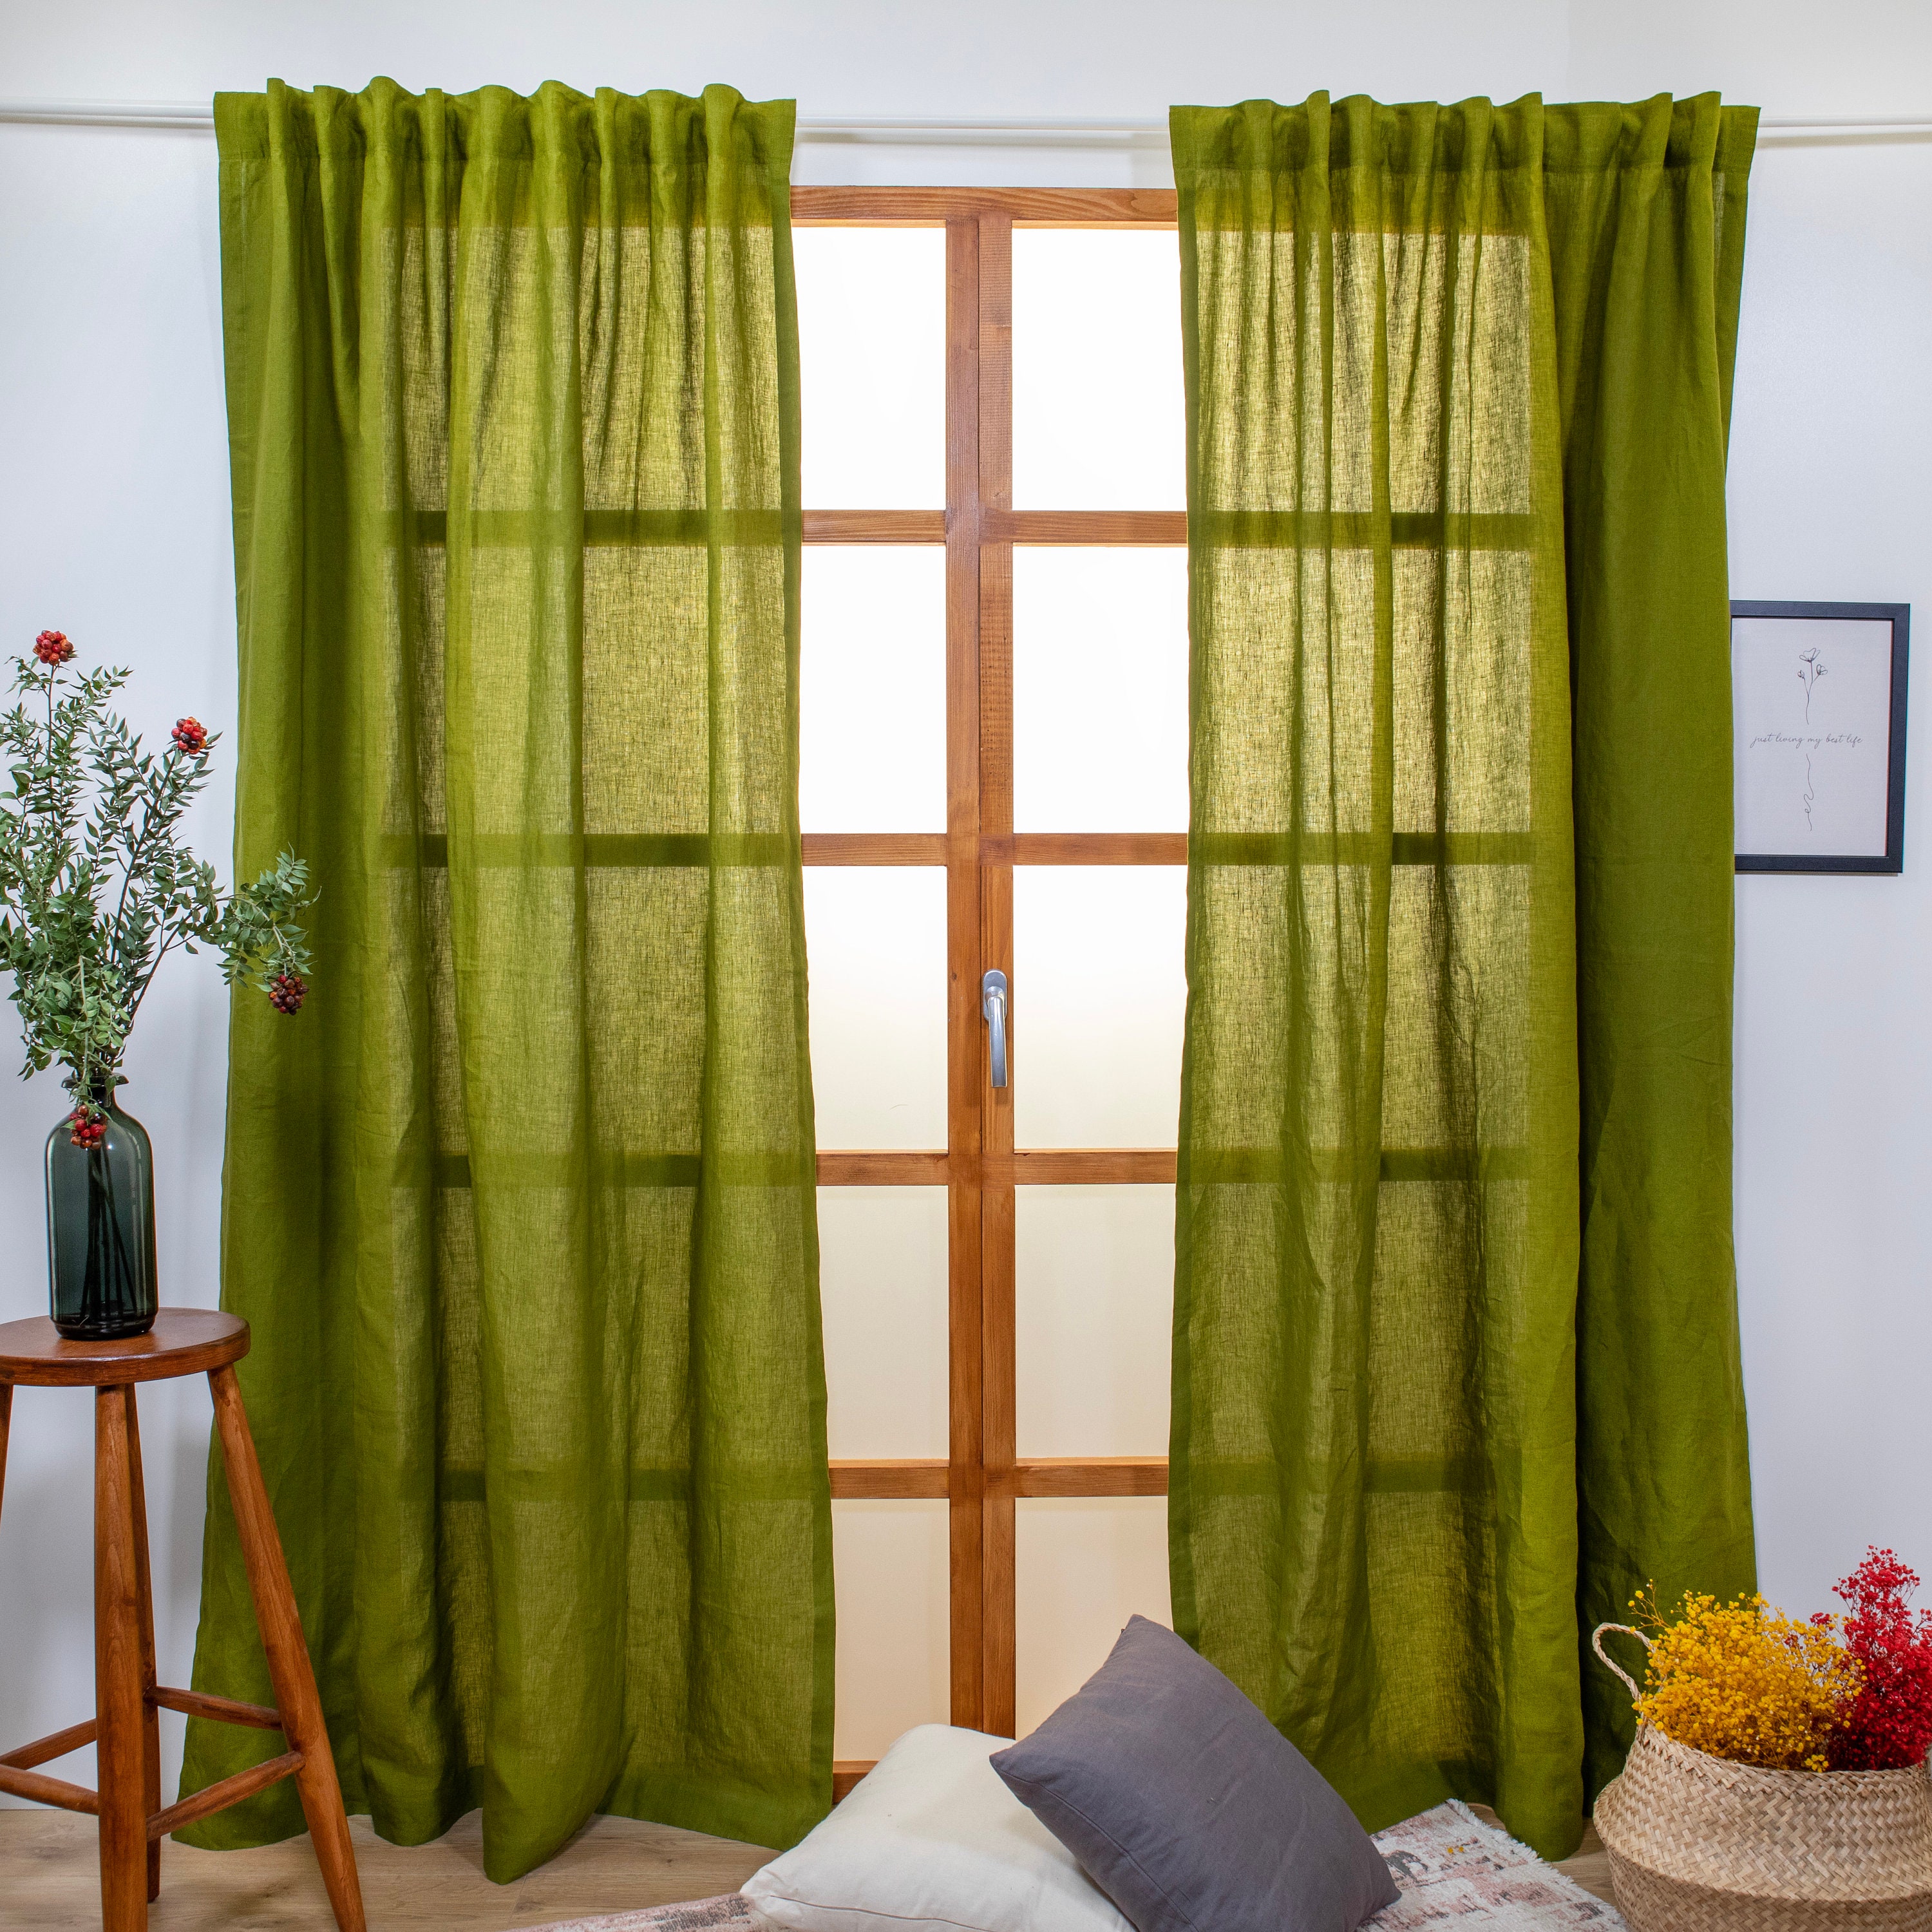 Velcro Sheer Curtains